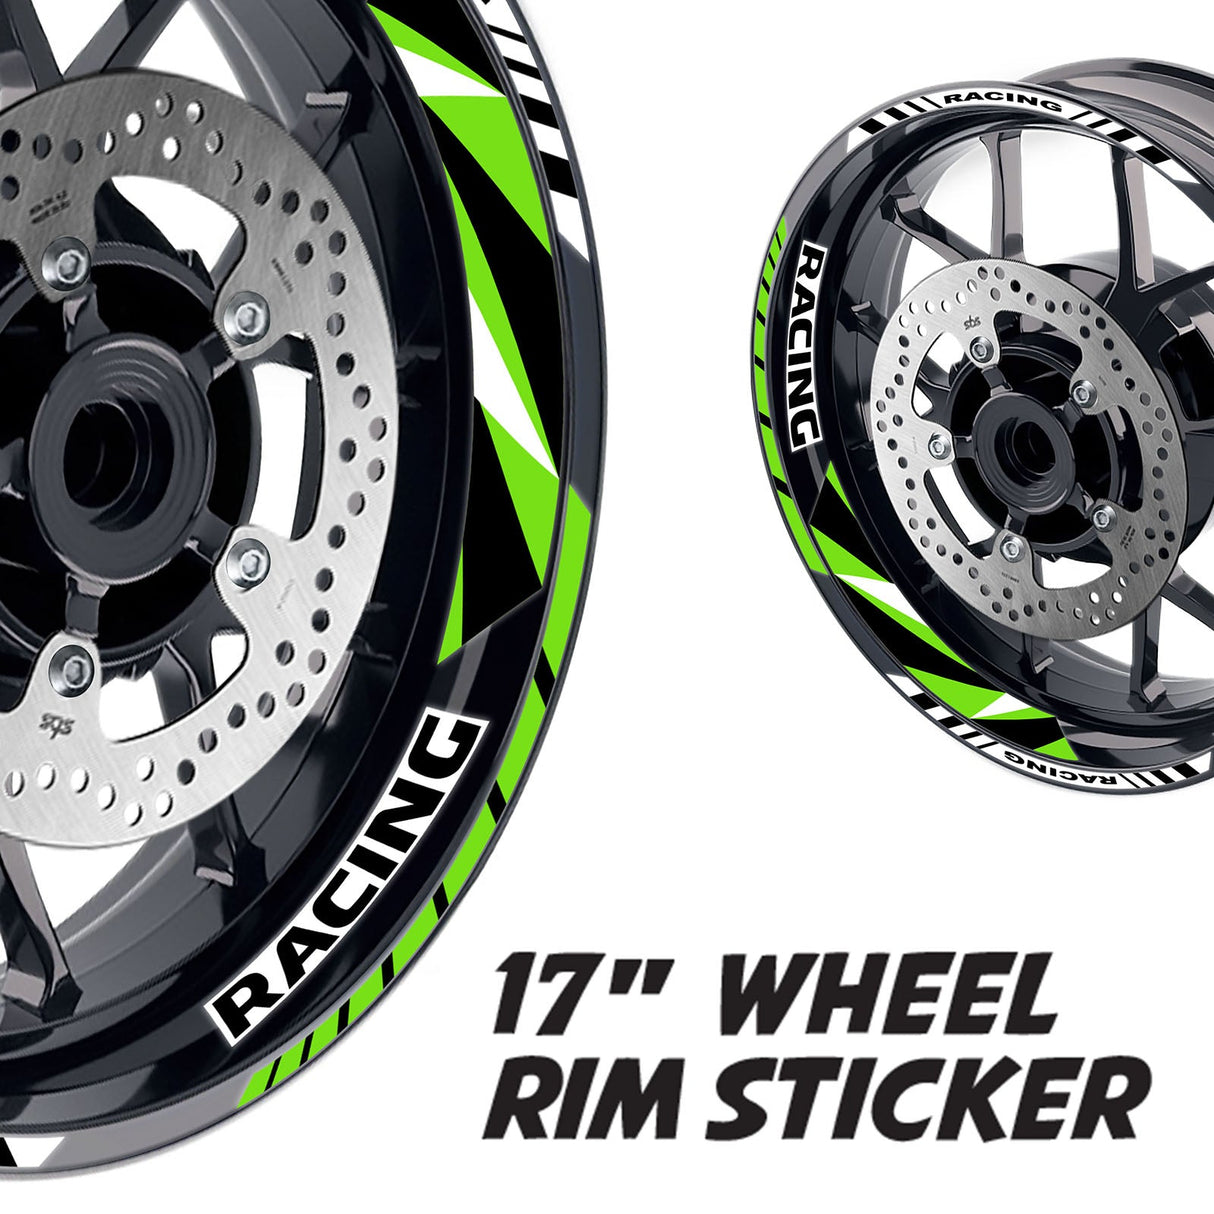 StickerBao Green 17 inch GP12 Platinum Inner Edge Rim Sticker Universal Motorcycle Rim Wheel Decal Racing For Suzuki